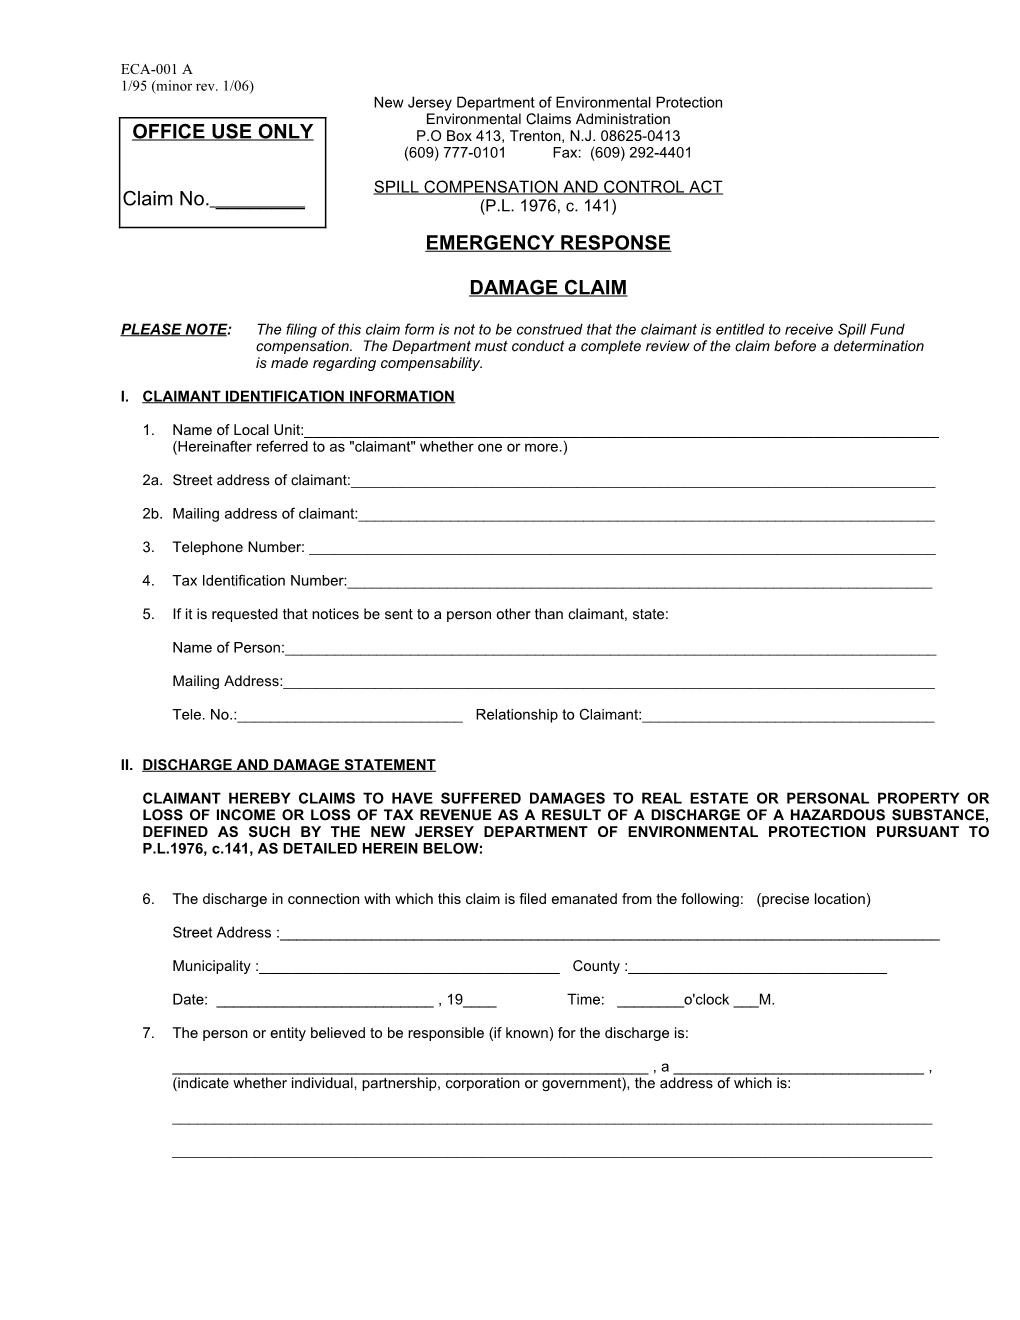 NJDEP Form ECA-001 a (1/95; Minor Rev. 1/2006)